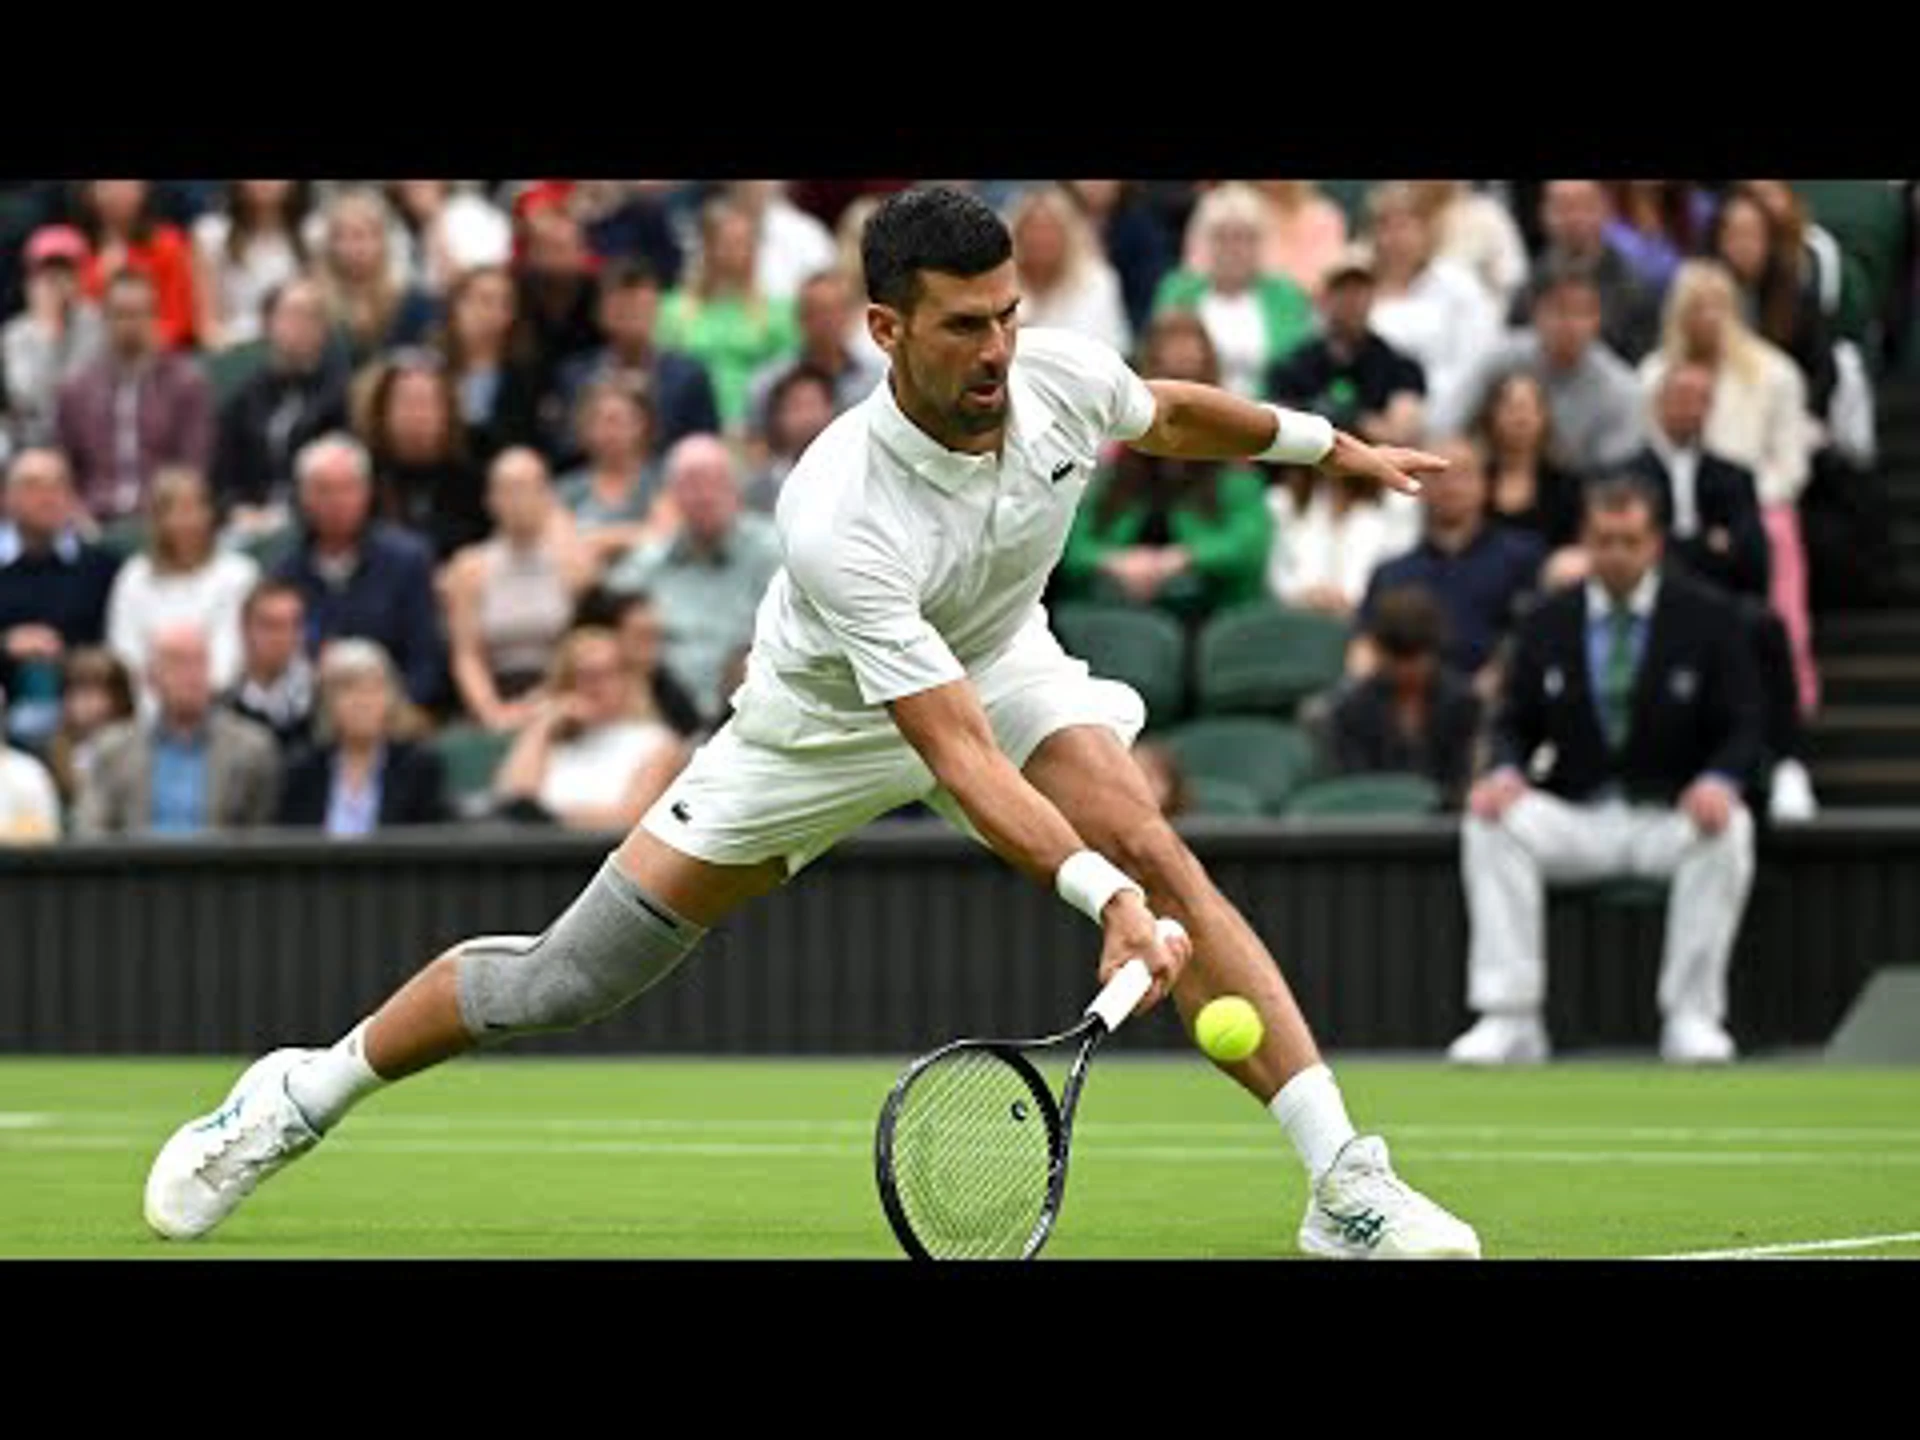 Novak Djokovic v Alexei Popyrin | Men's singles | 3rd Round | Highlights | Wimbledon